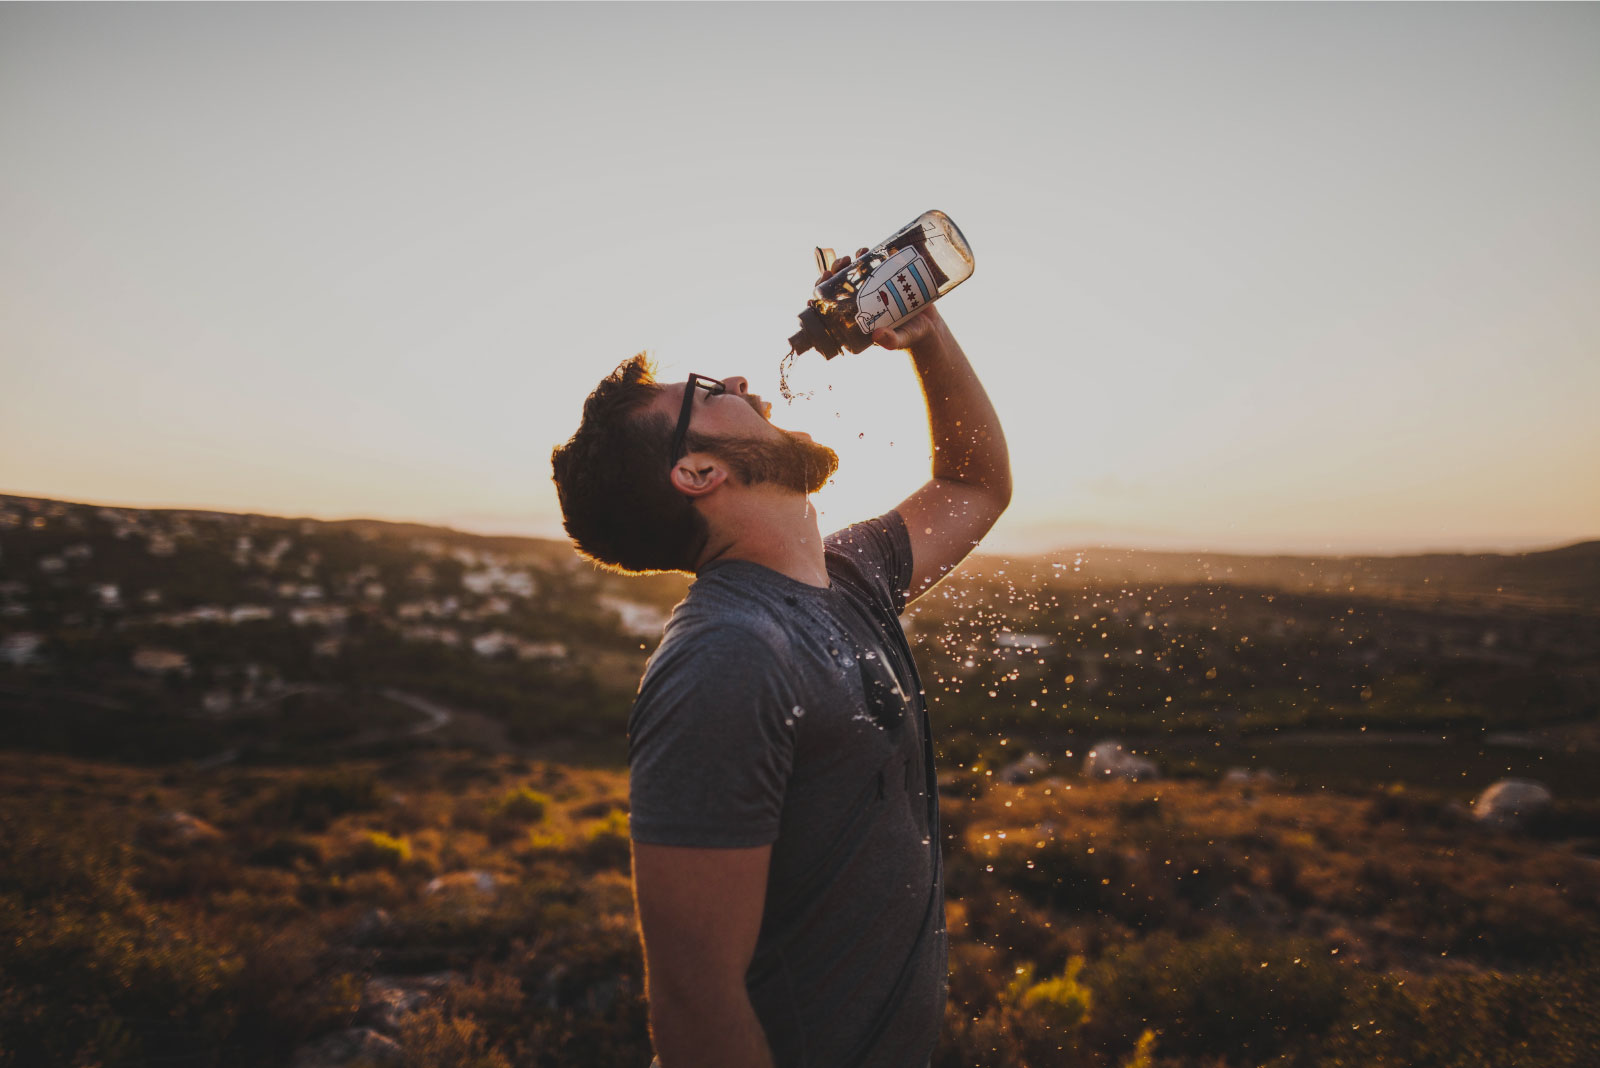 Man drinking call-a-cooler water